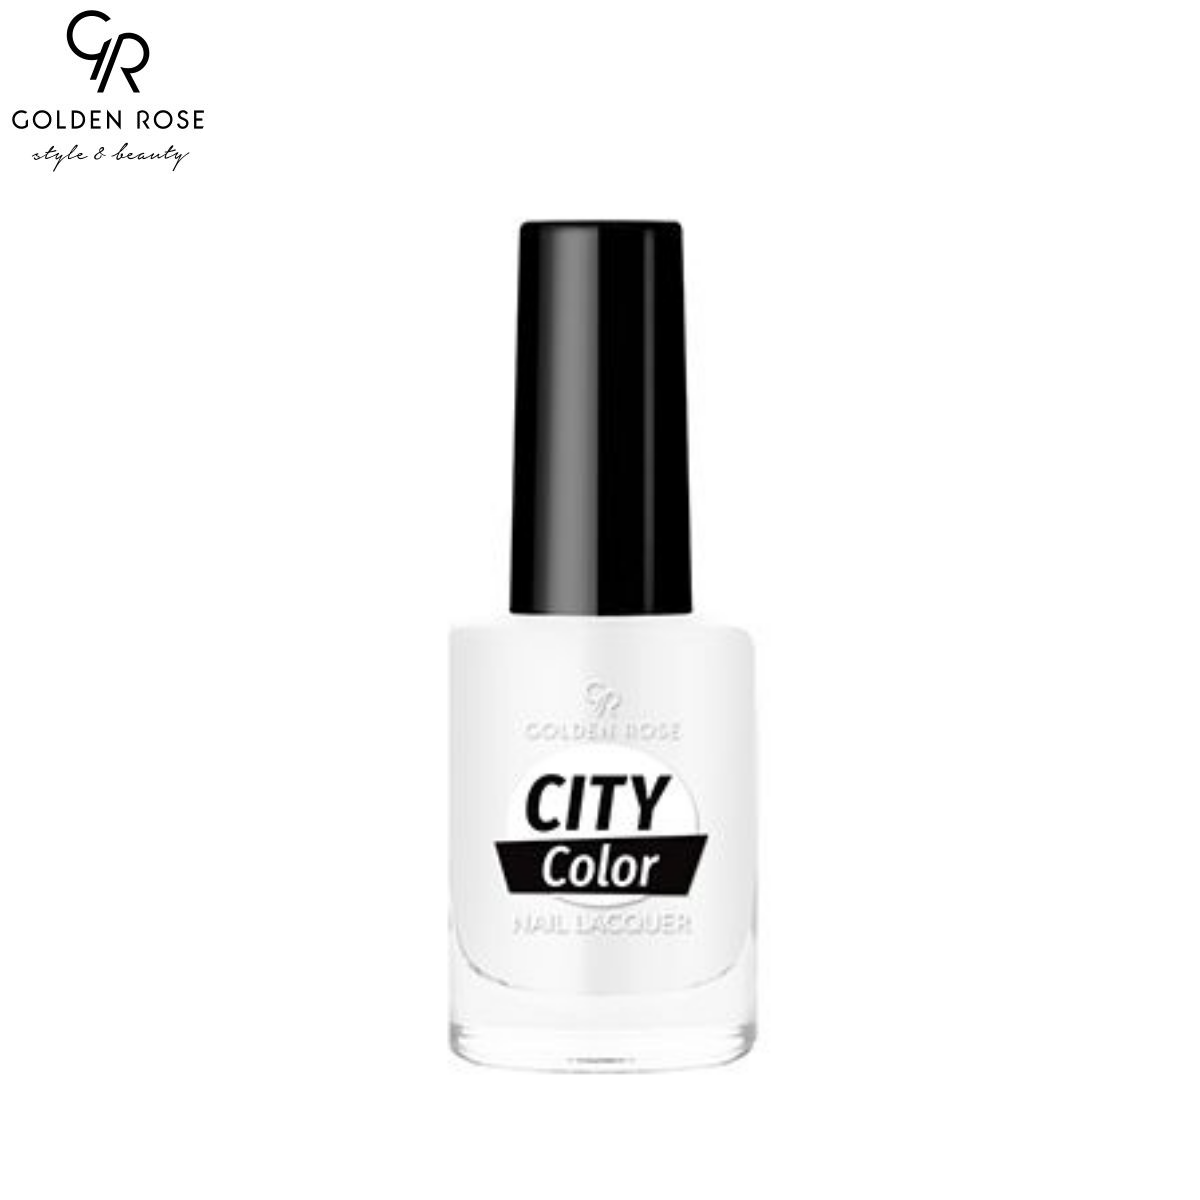 Лак для ногтей Golden Rose серии CITY COLOR Nail Lacquer 03 10.2ml istanbul memories of a city